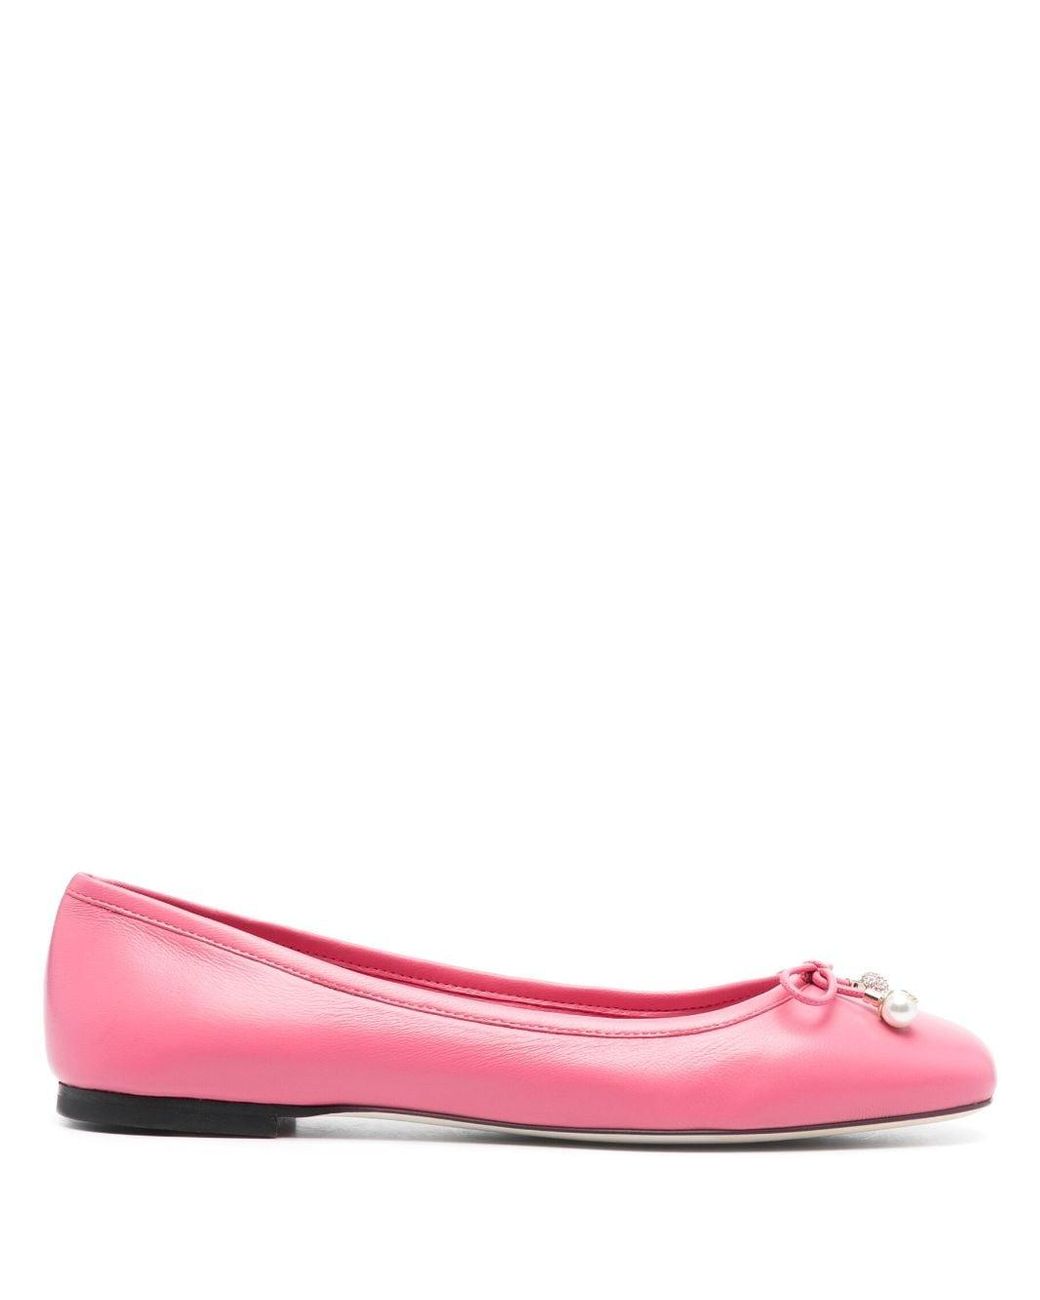 Jimmy Choo Elme Ballerina Shoes in Pink | Lyst